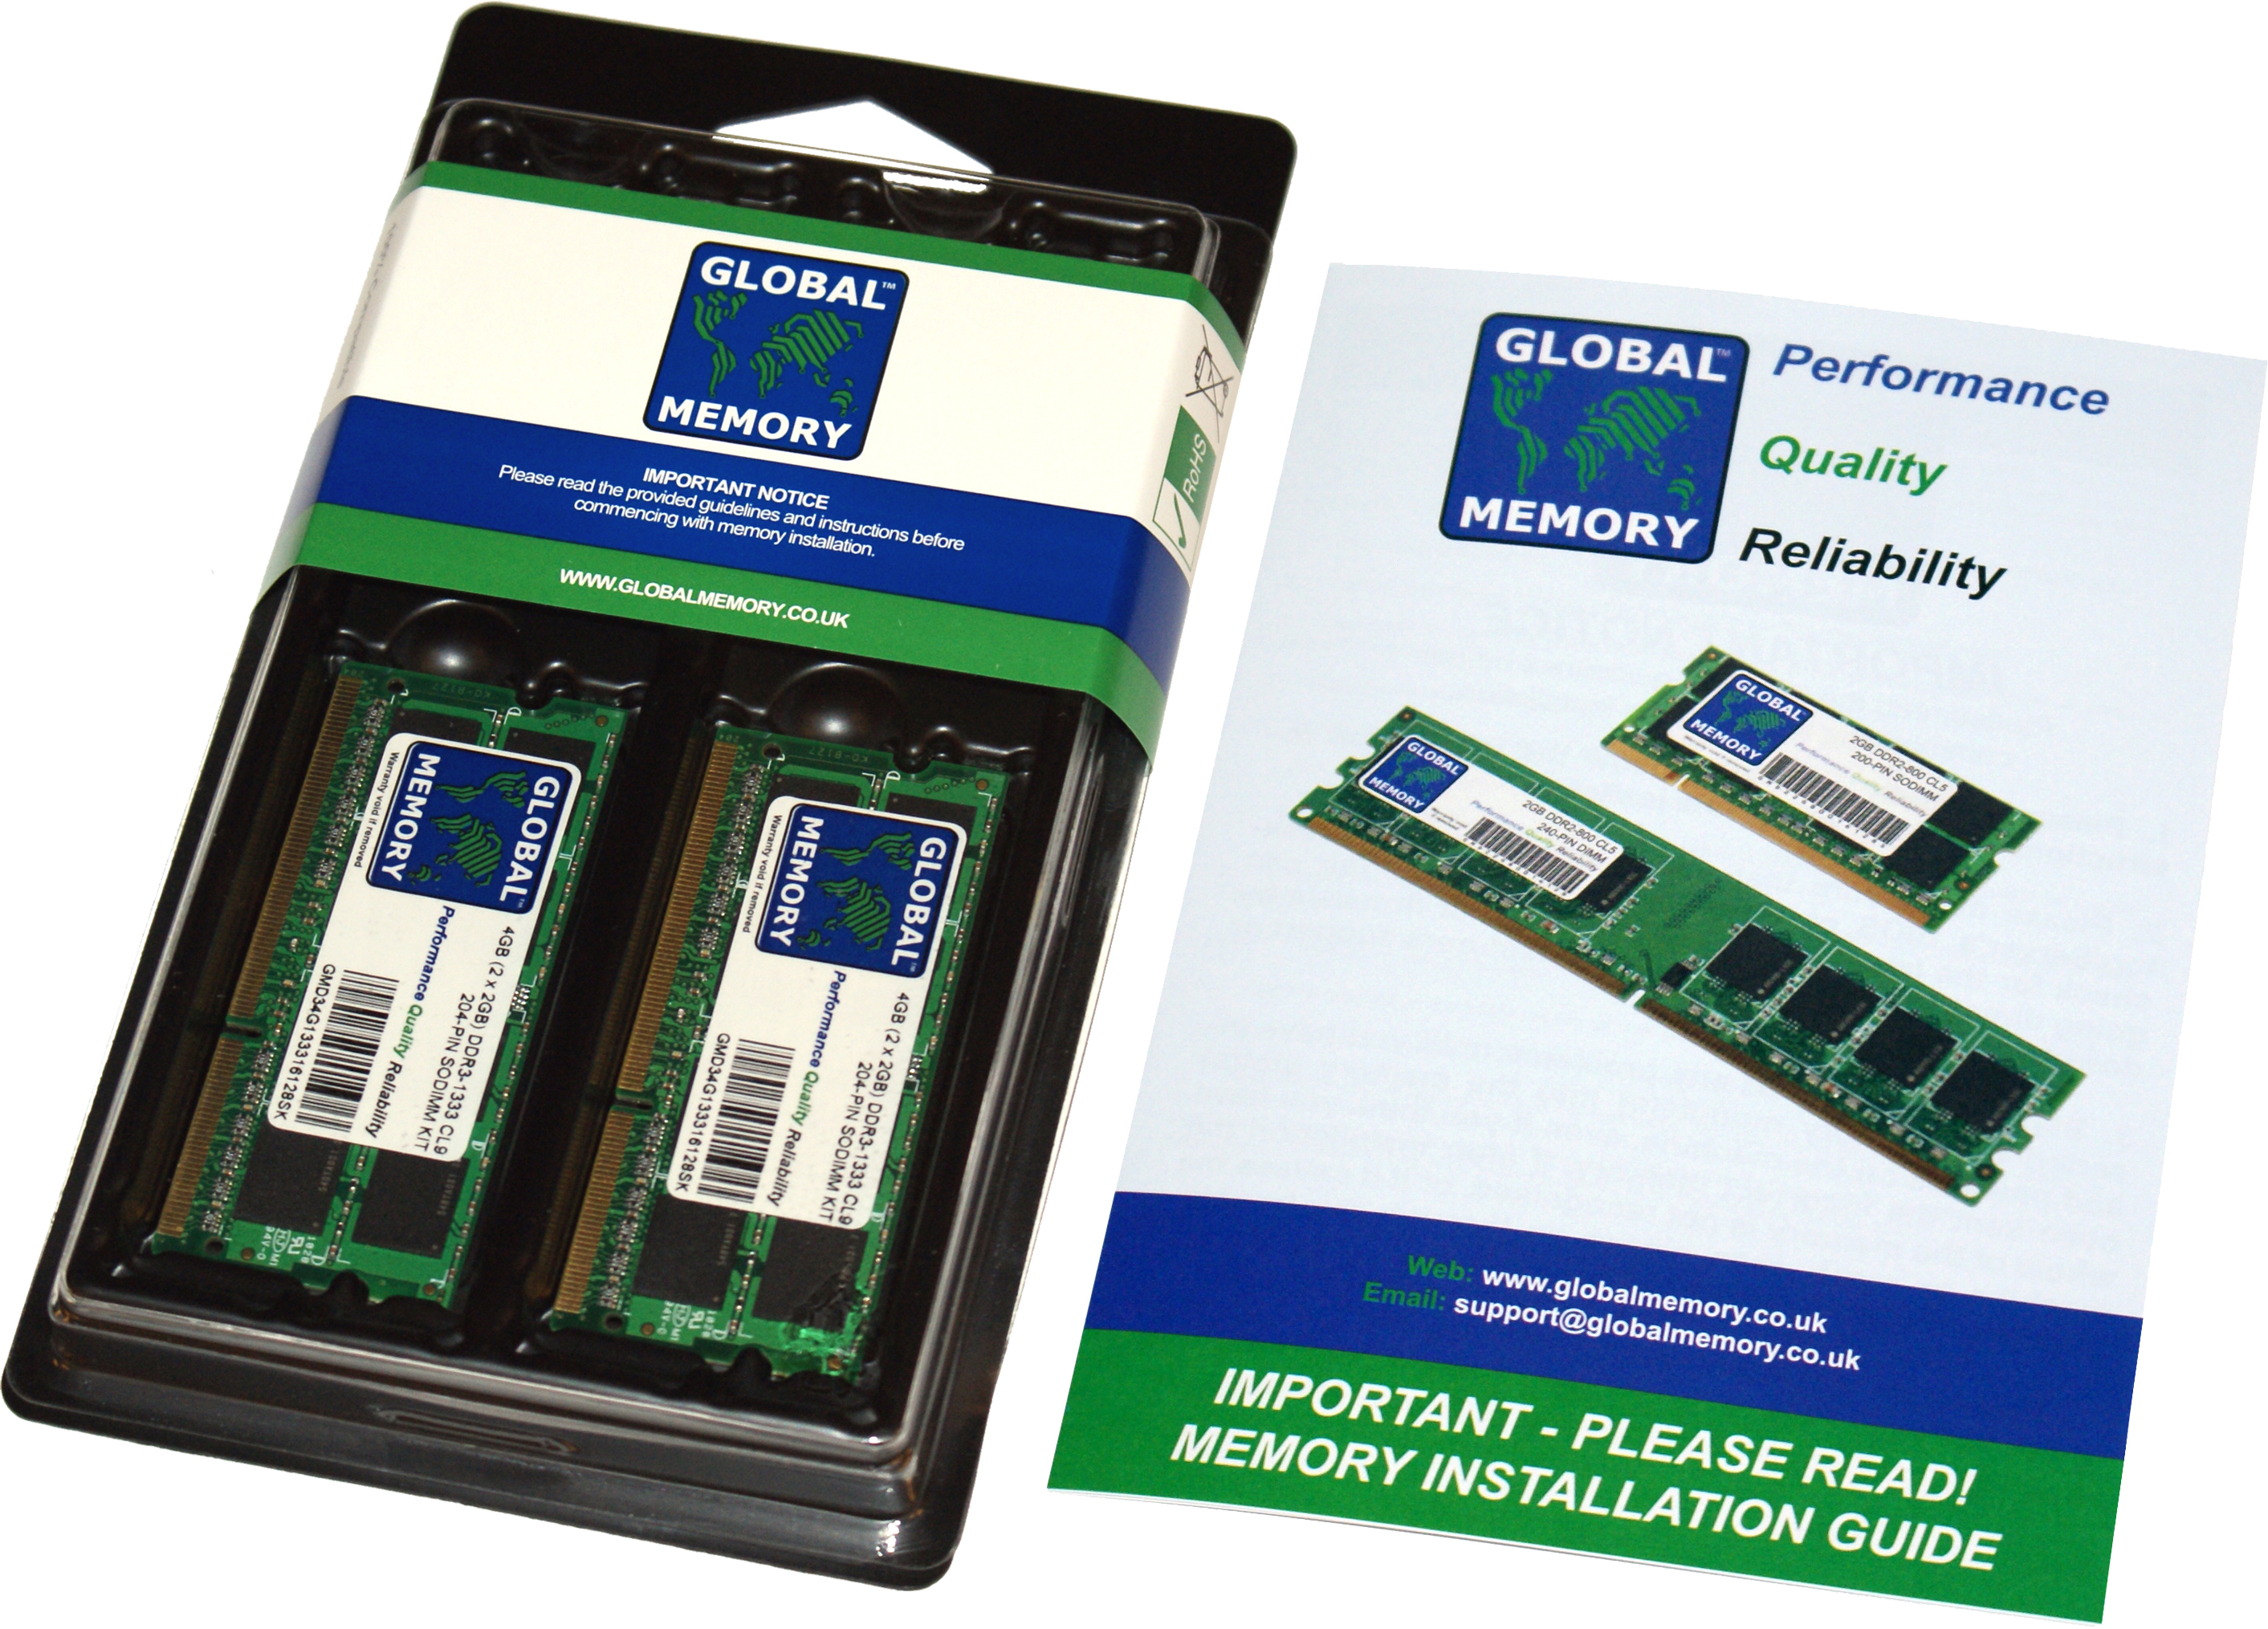 32GB (2 x 16GB) DDR3 1866MHz PC3-14900 204-PIN SODIMM MEMORY RAM KIT FOR LENOVO LAPTOPS/NOTEBOOKS